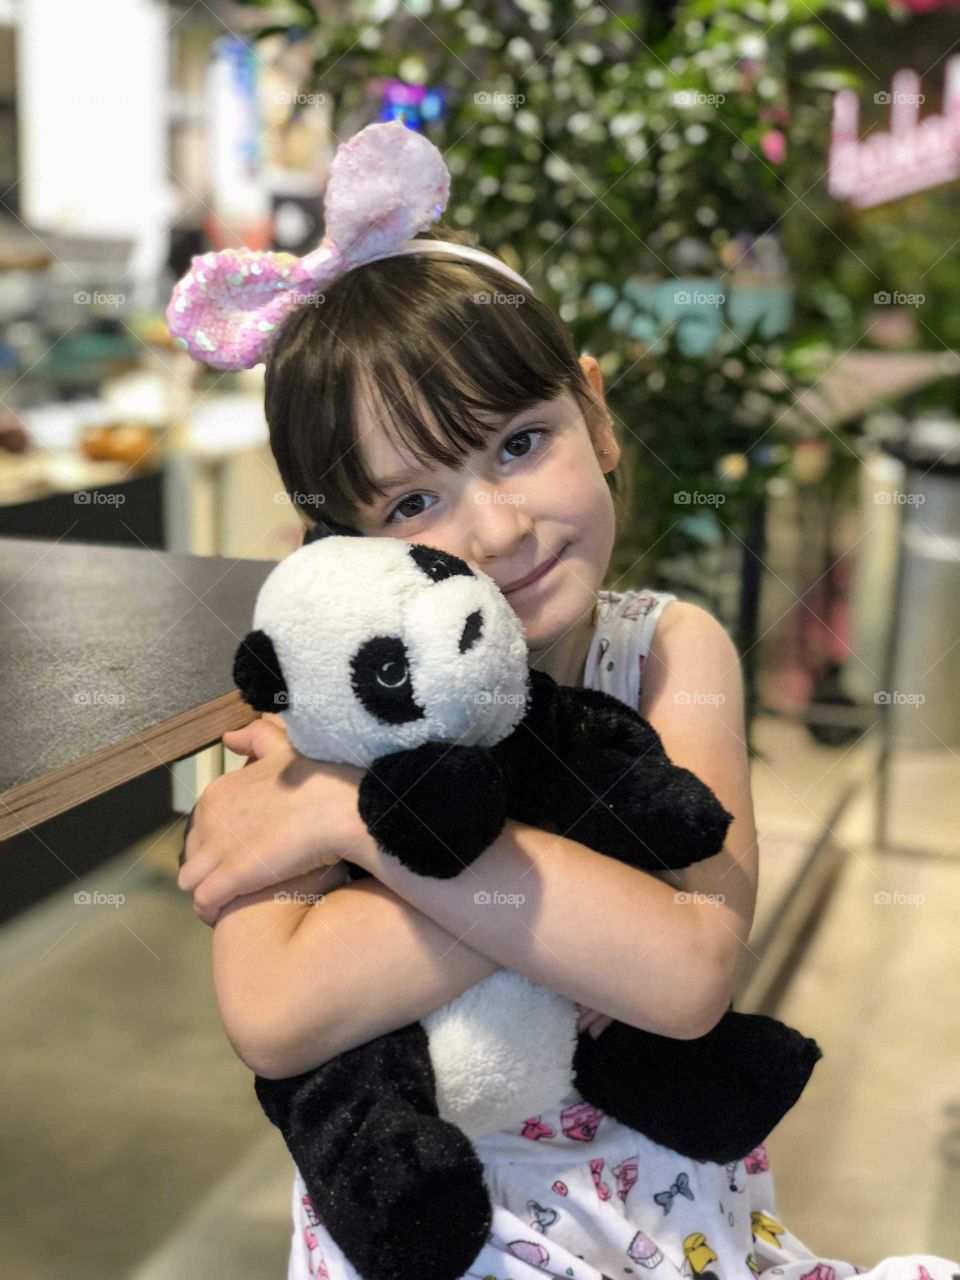 Little girl with teddy